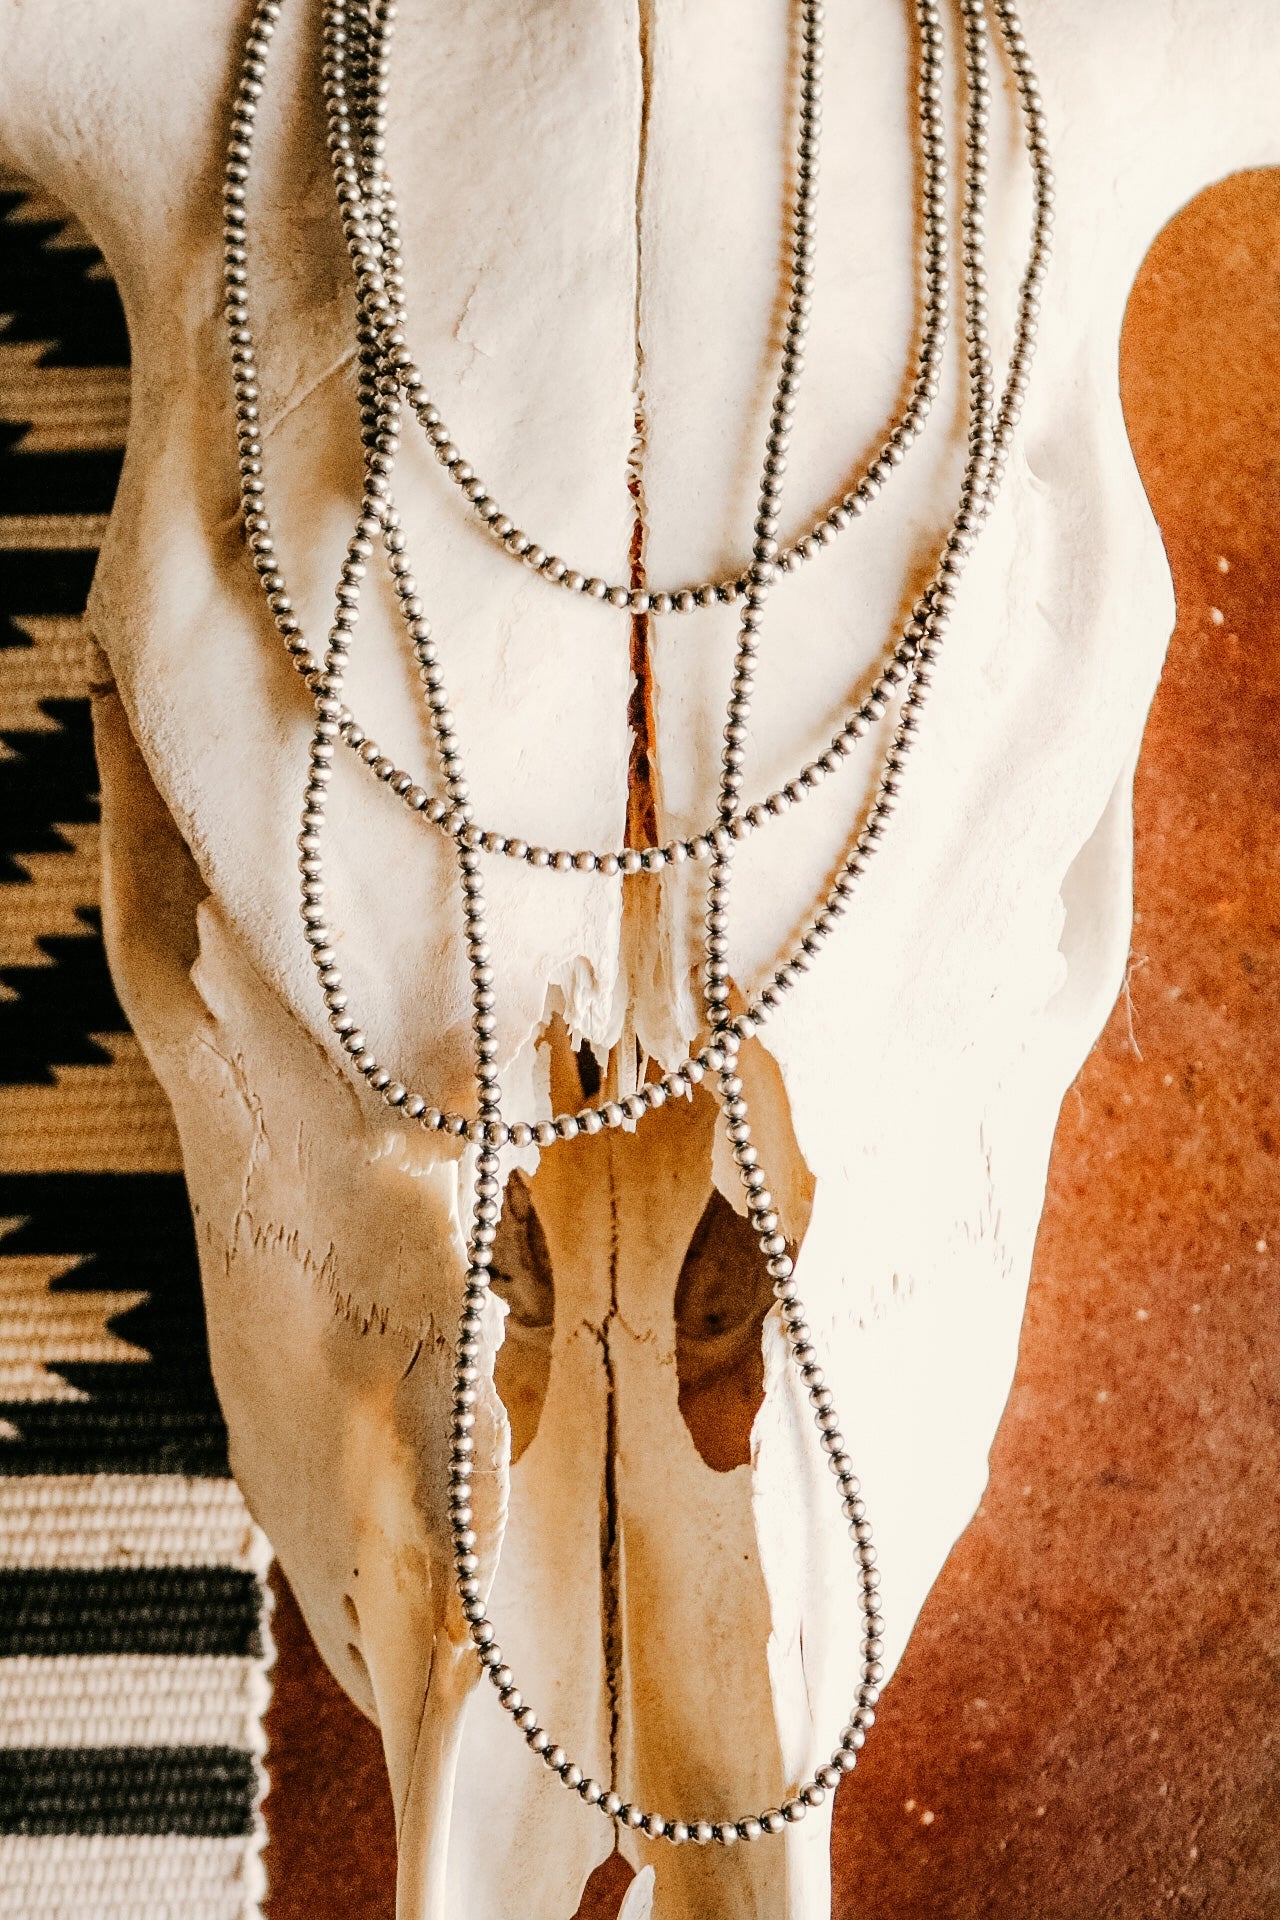 4mm Navajo Pearls